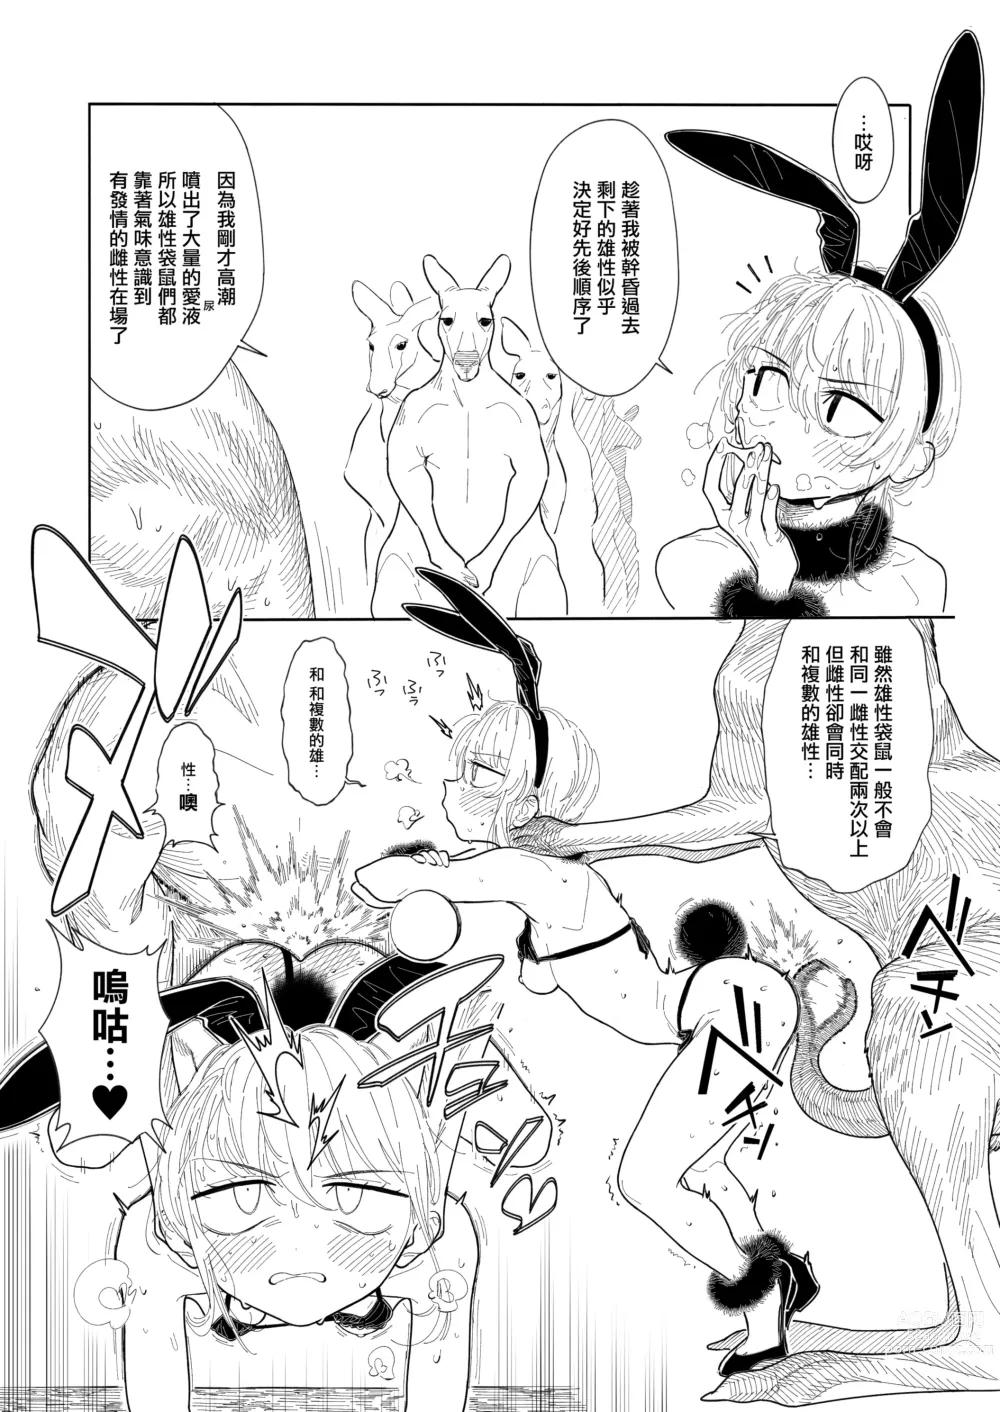 Page 16 of doujinshi Kangaroo no Kimochi Ii